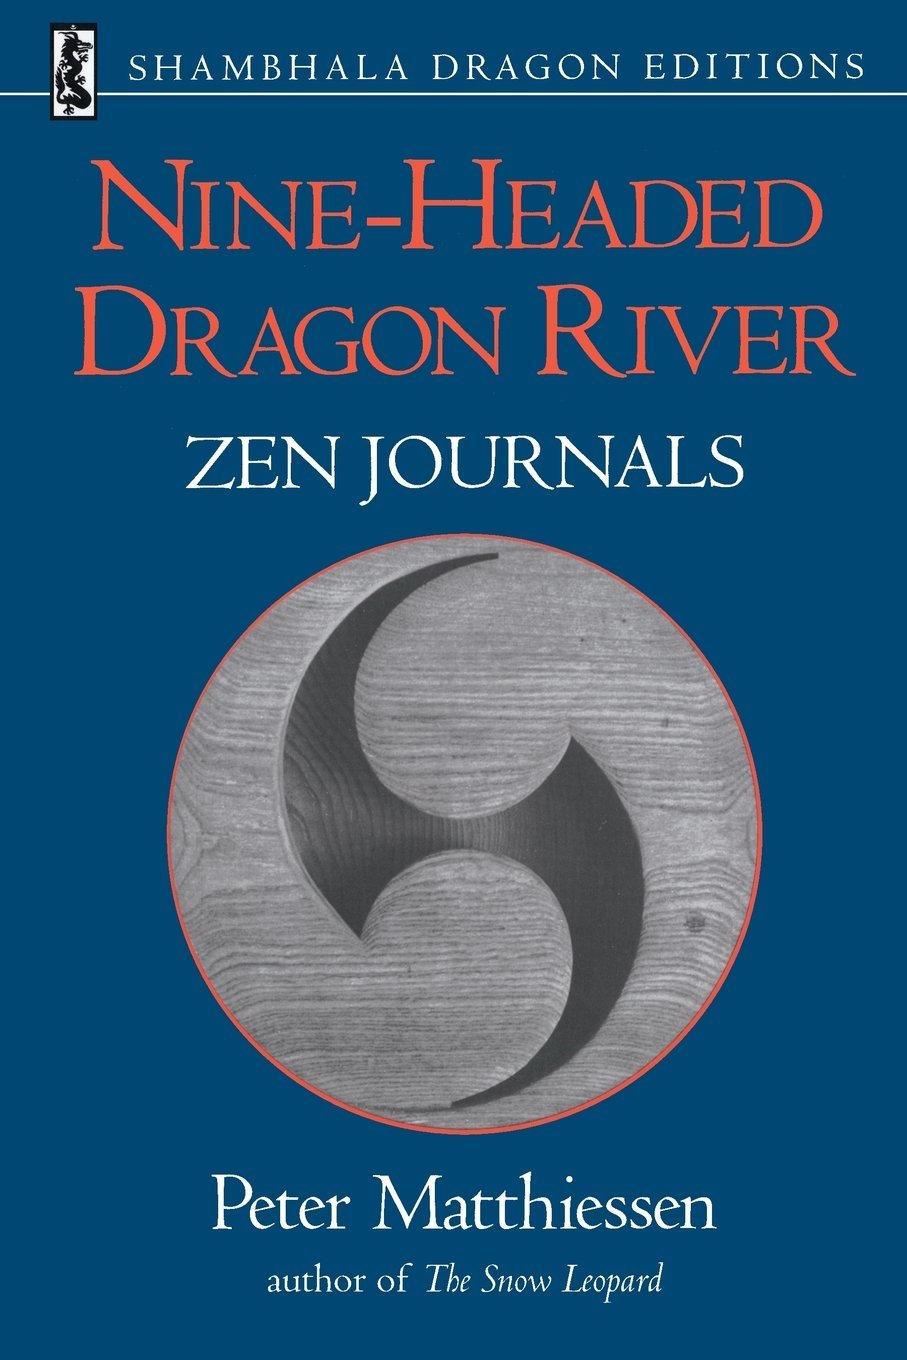 Nine-Headed Dragon River by Peter Matthiessen